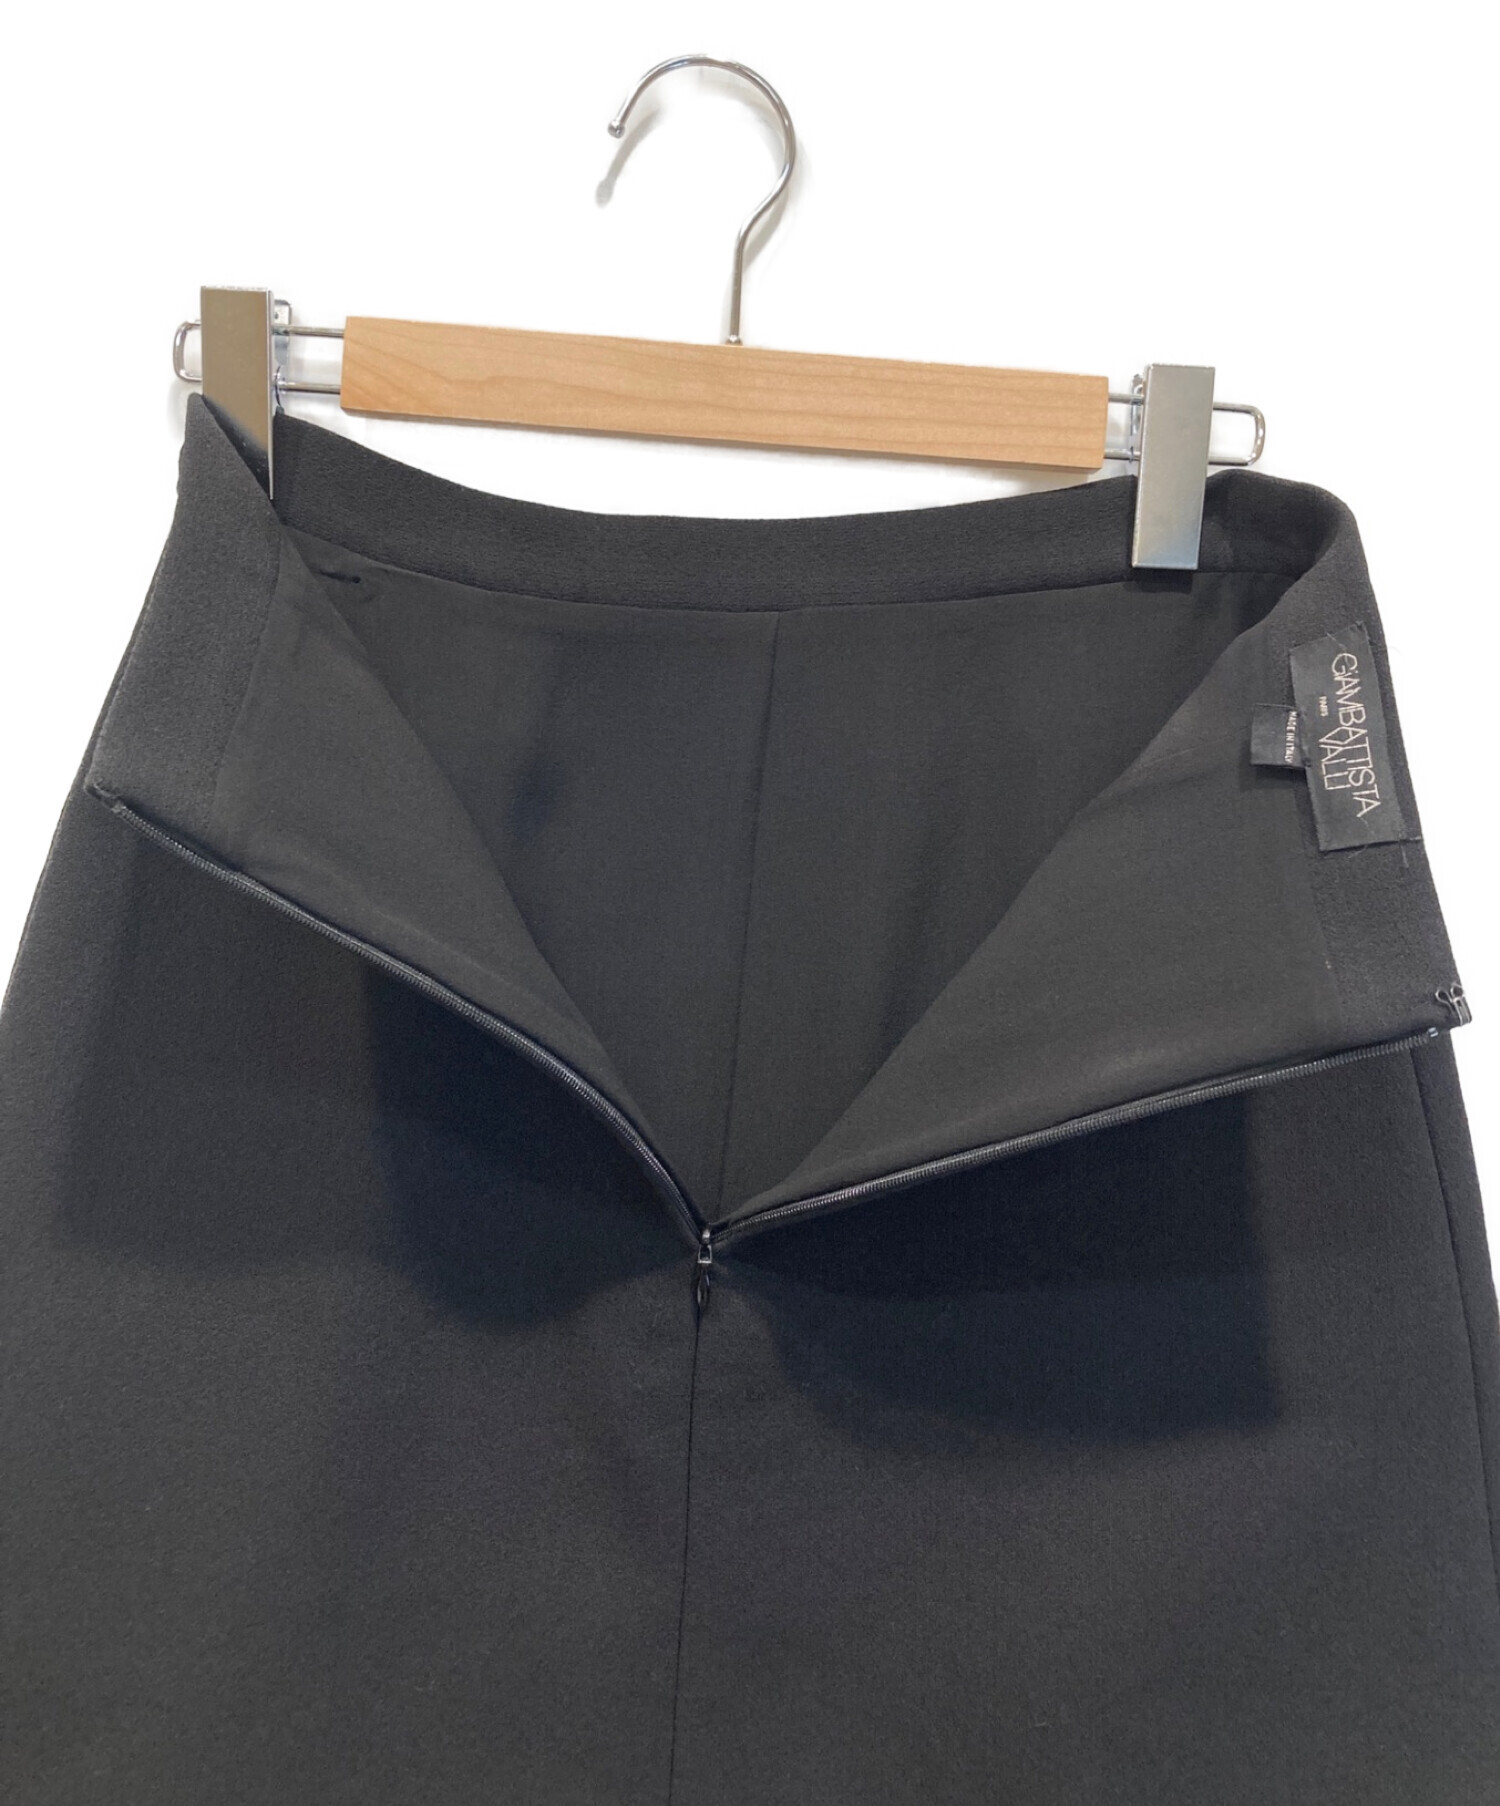 GiAMBATTiSTA VALLi (ジャンバティスタ・バリ) シルク混スカート ブラック サイズ:38/XXS